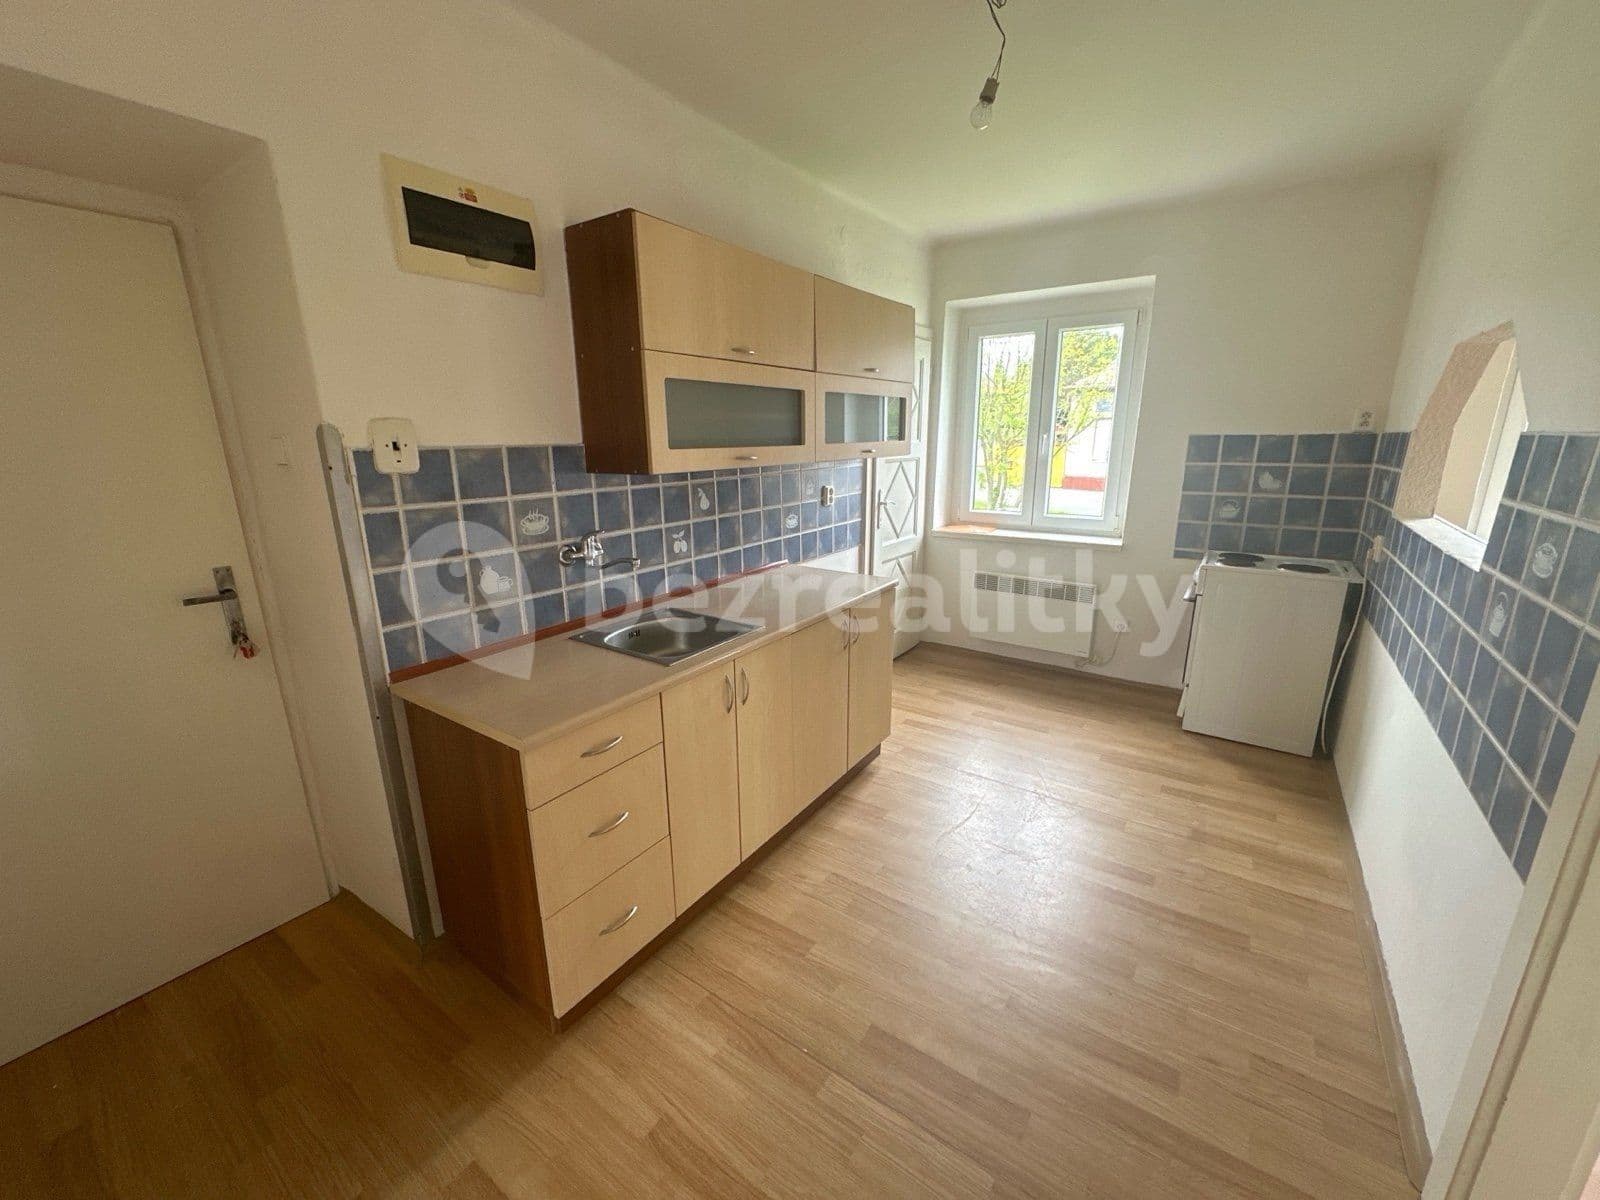 3 bedroom flat to rent, 65 m², Slámova, Ostrava, Moravskoslezský Region